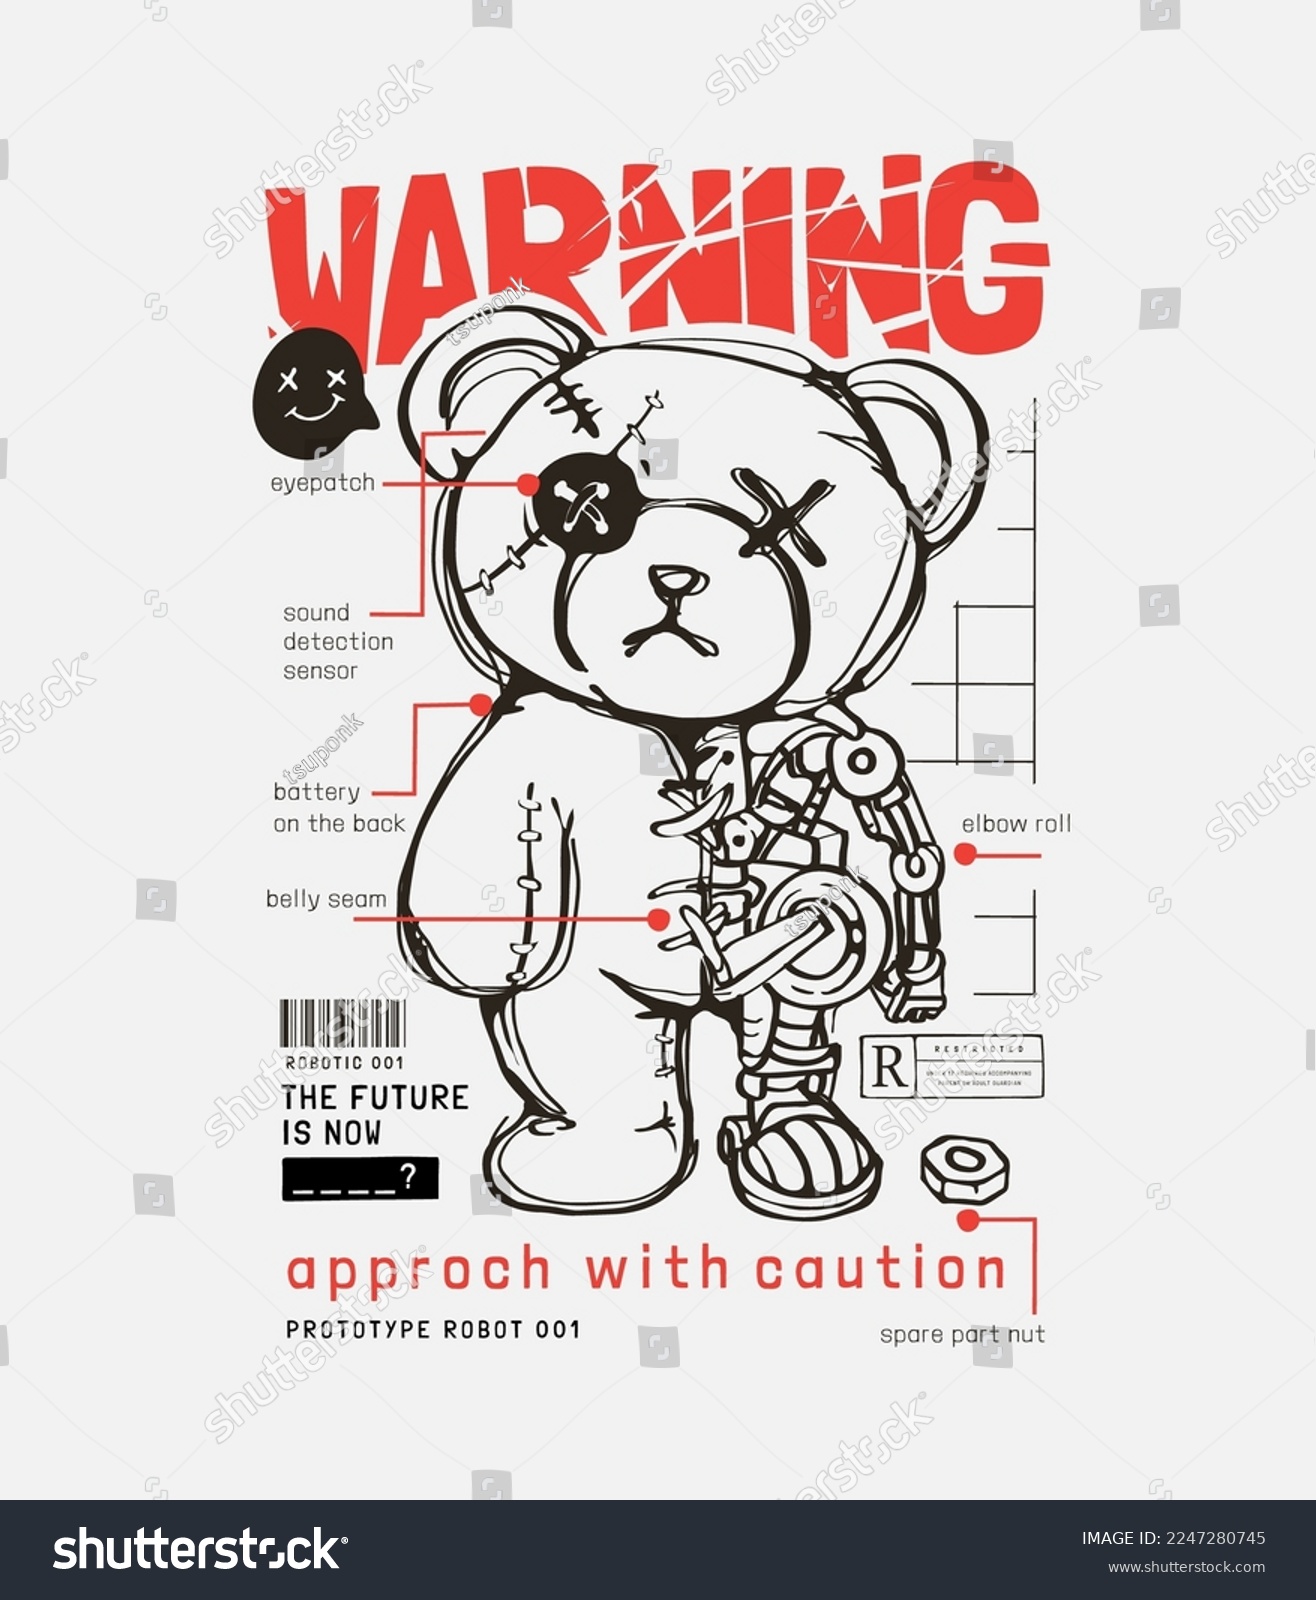 warning slogan with bear doll robot anatomy vector illustration #2247280745